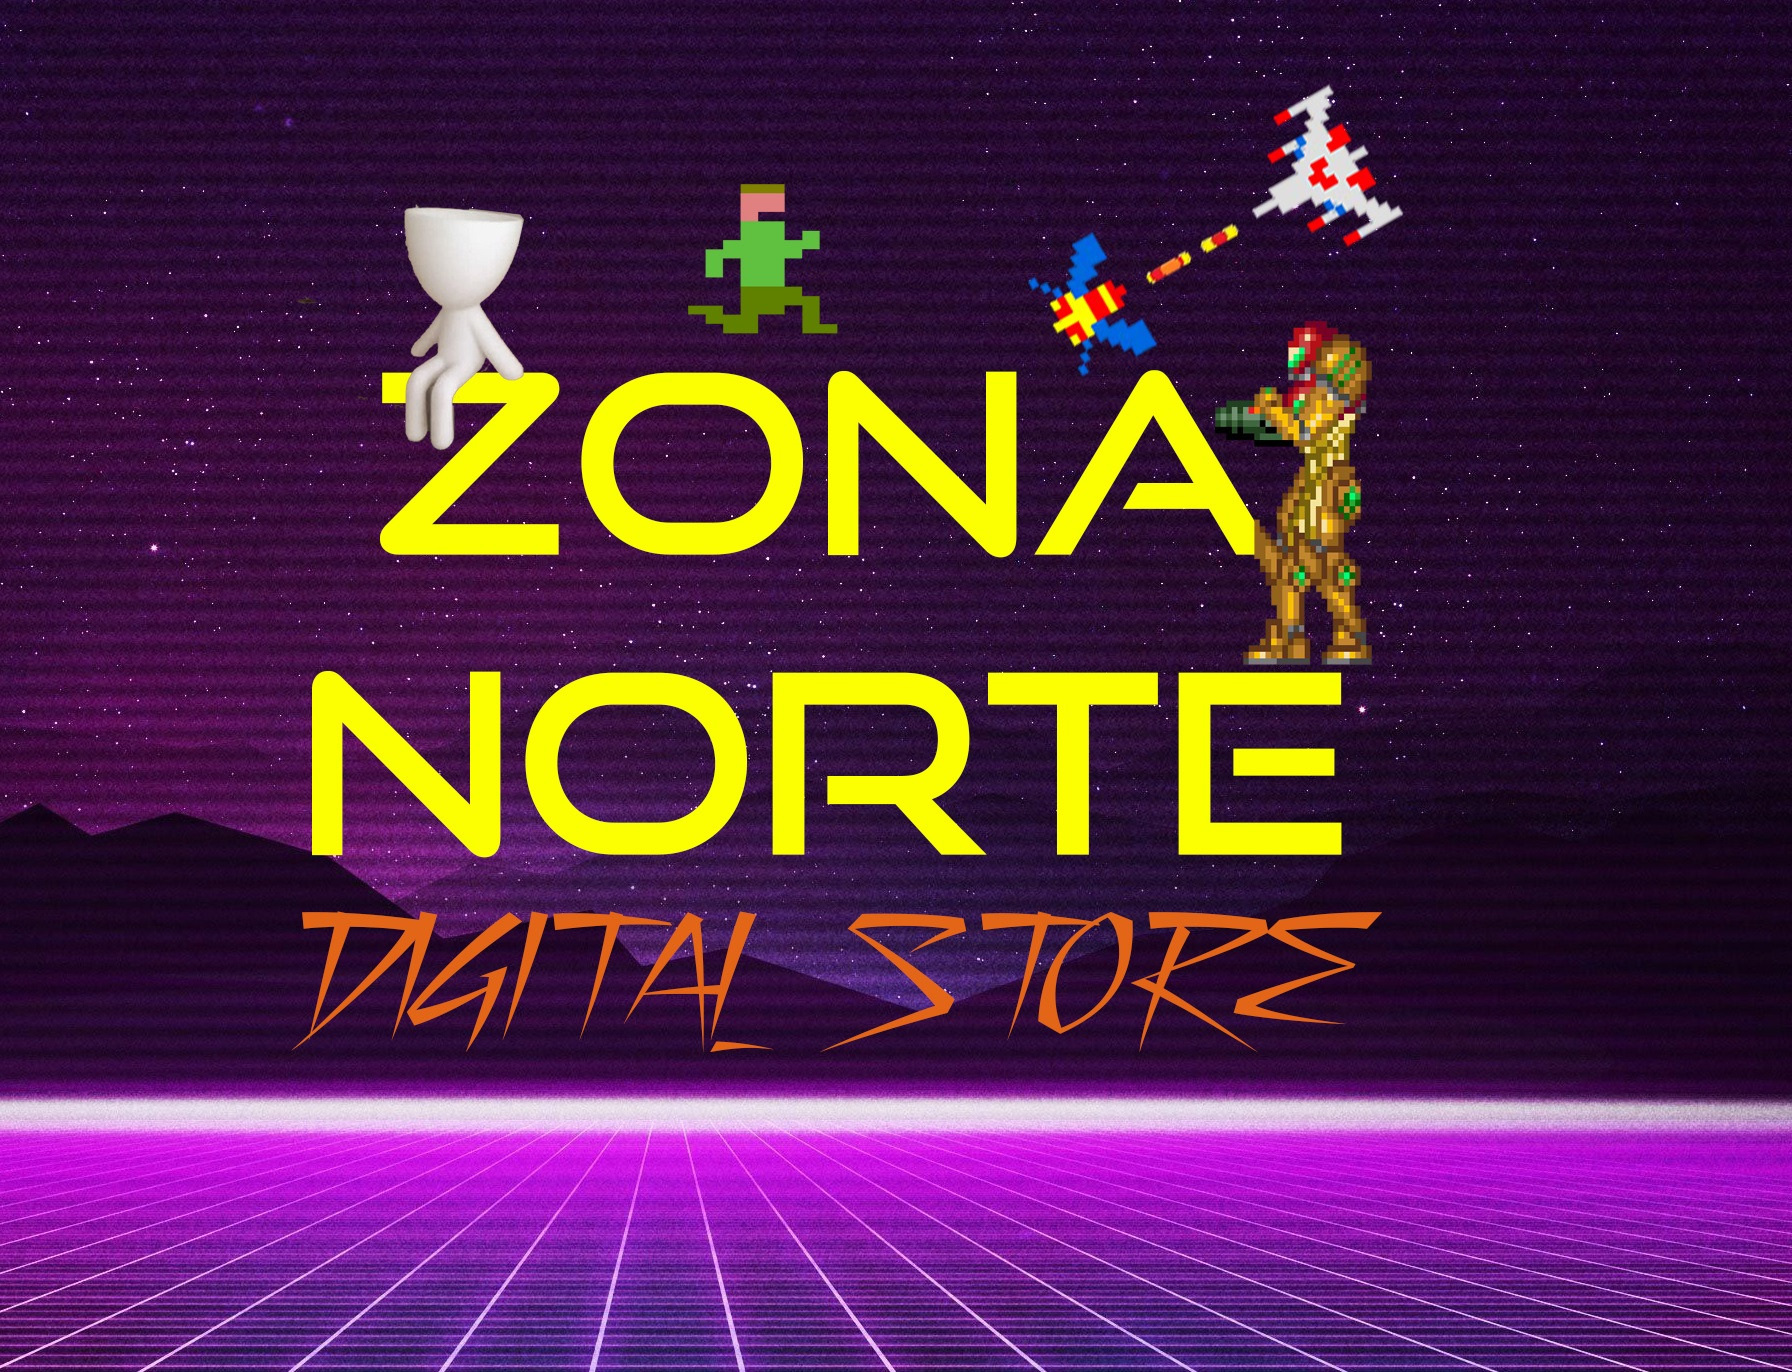 ZONA NORTE DIGITAL STORE